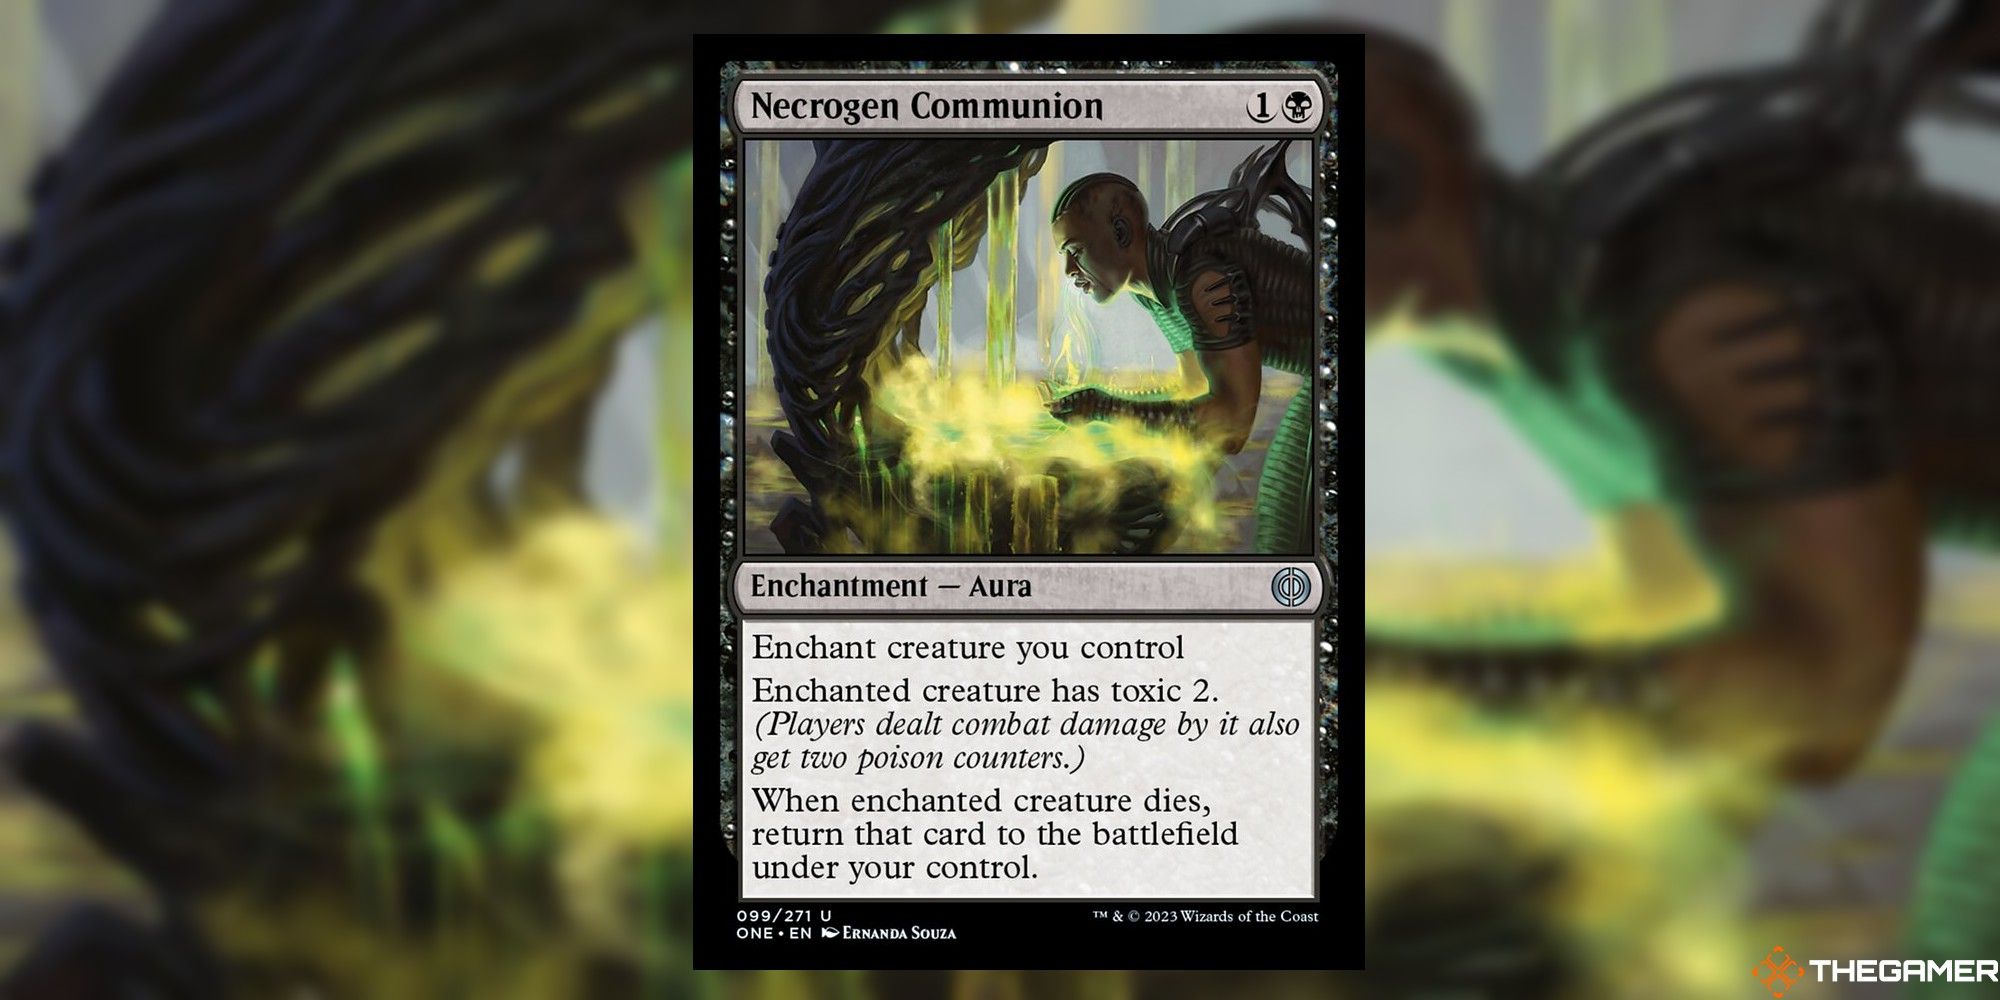 Necrogen Communion card and art background